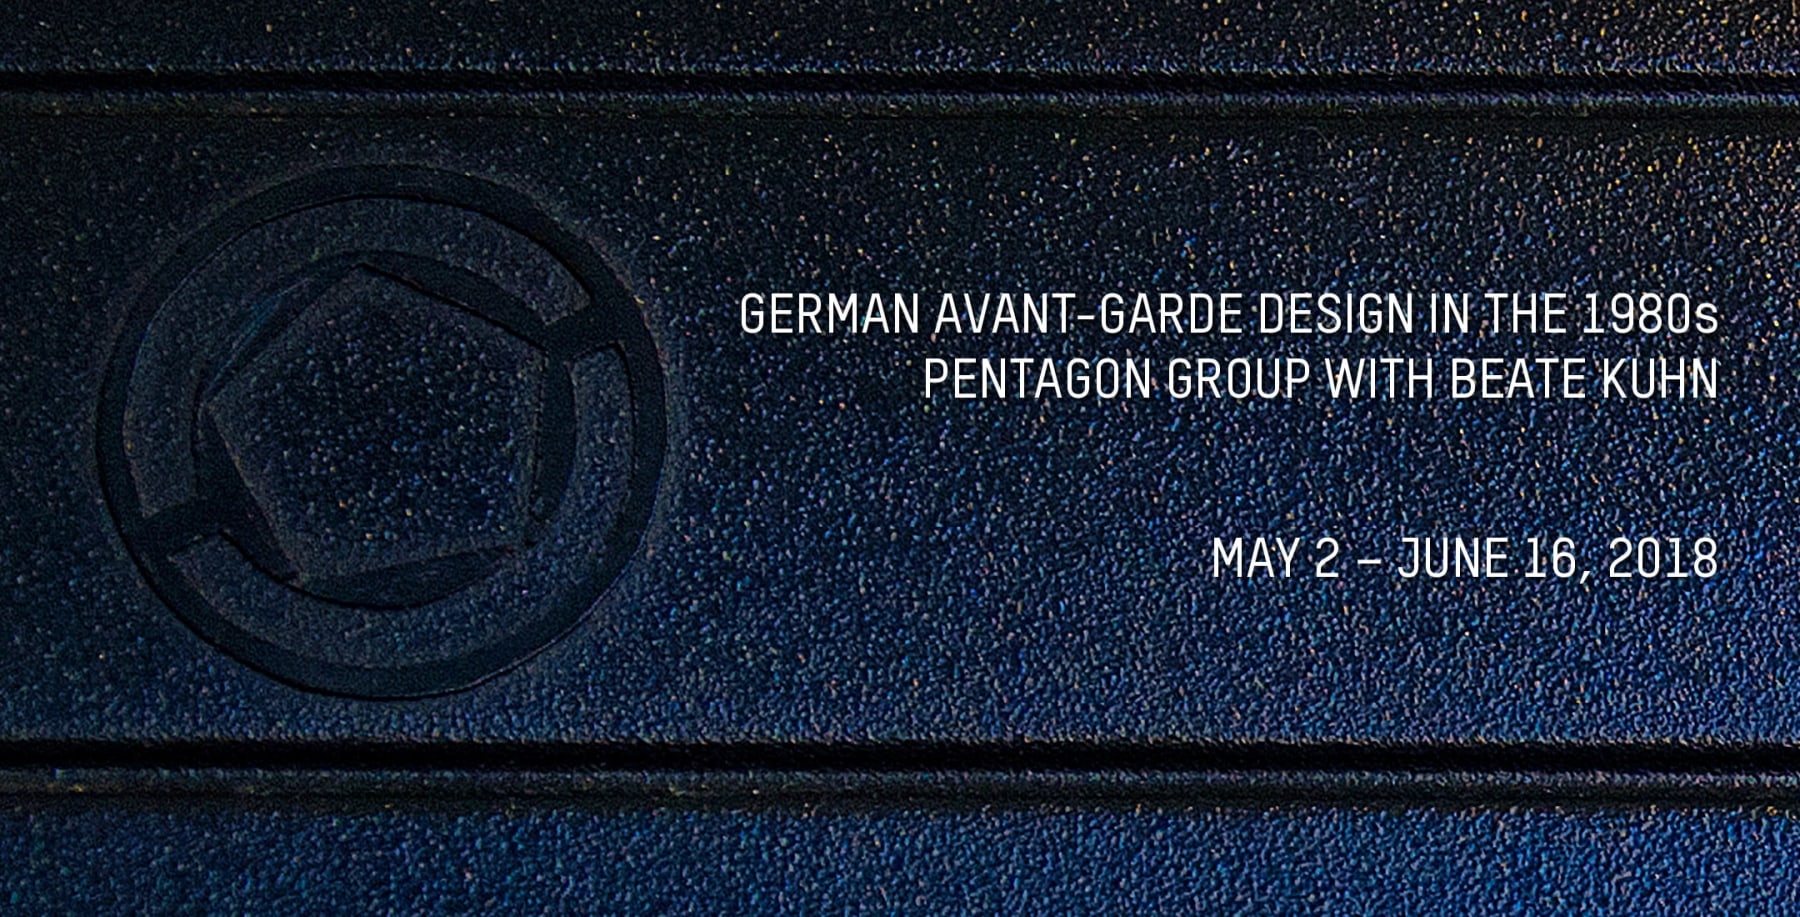 German Avant-Garde Design of the 1980s: Pentagon Group with Beate Kuhn